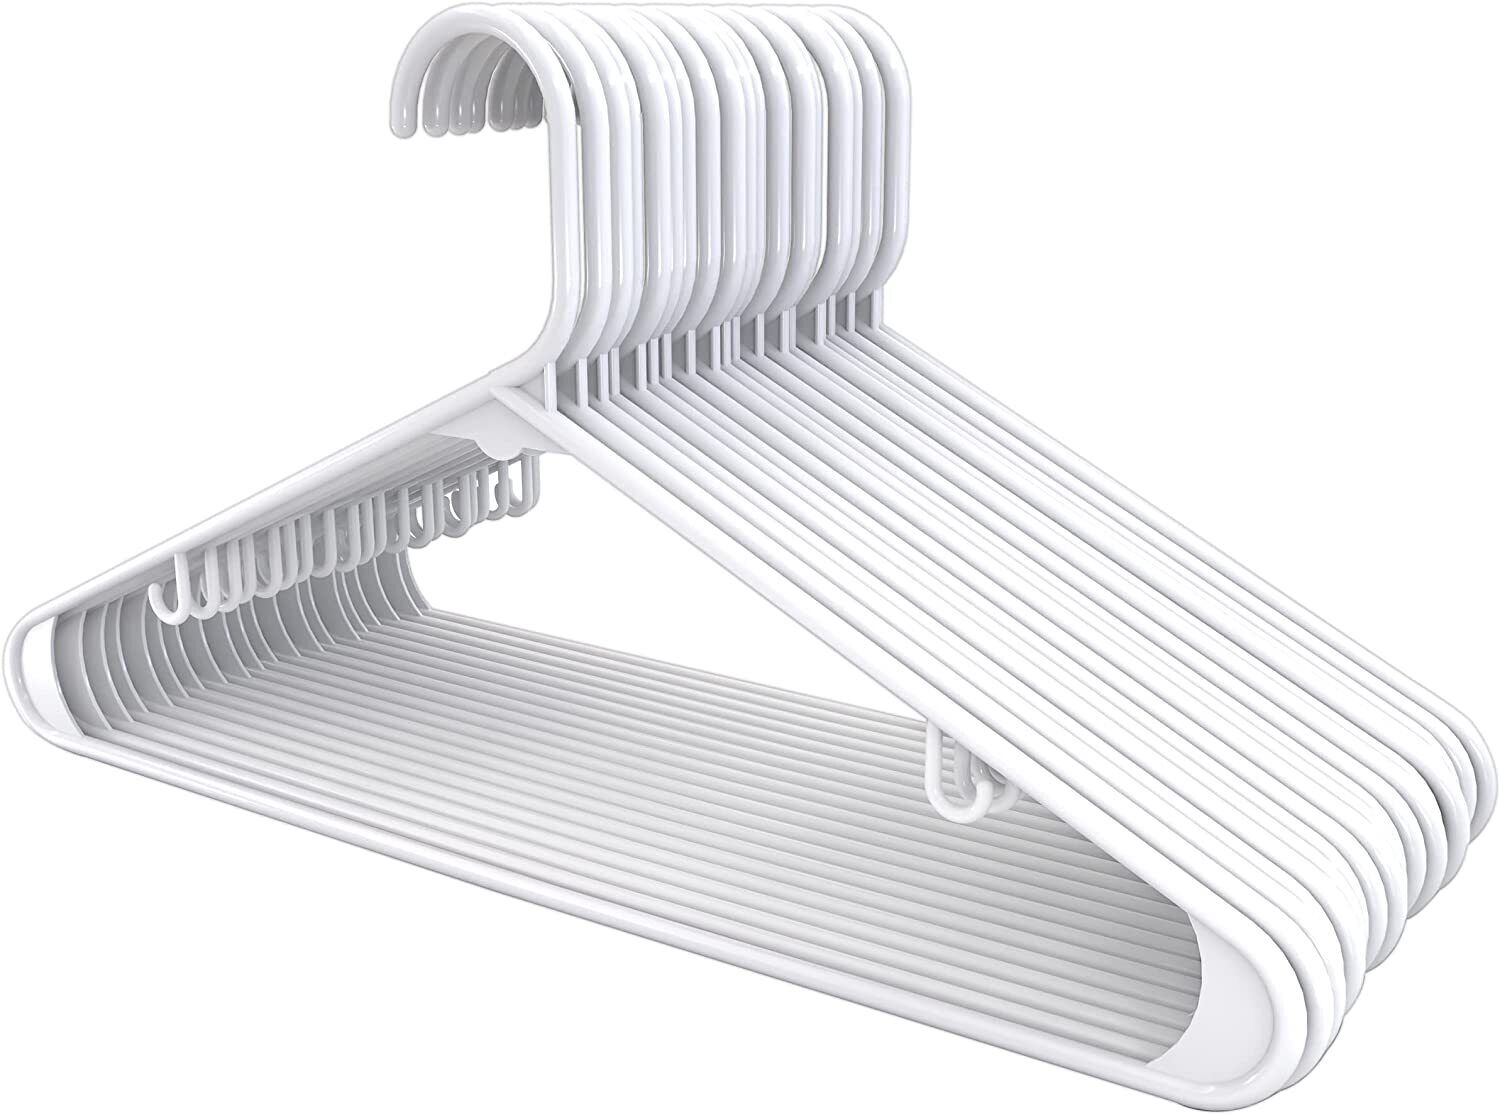 Plastic Hangers Durable Slim Stylish New in Pack of 30 & 150 Utopia Home